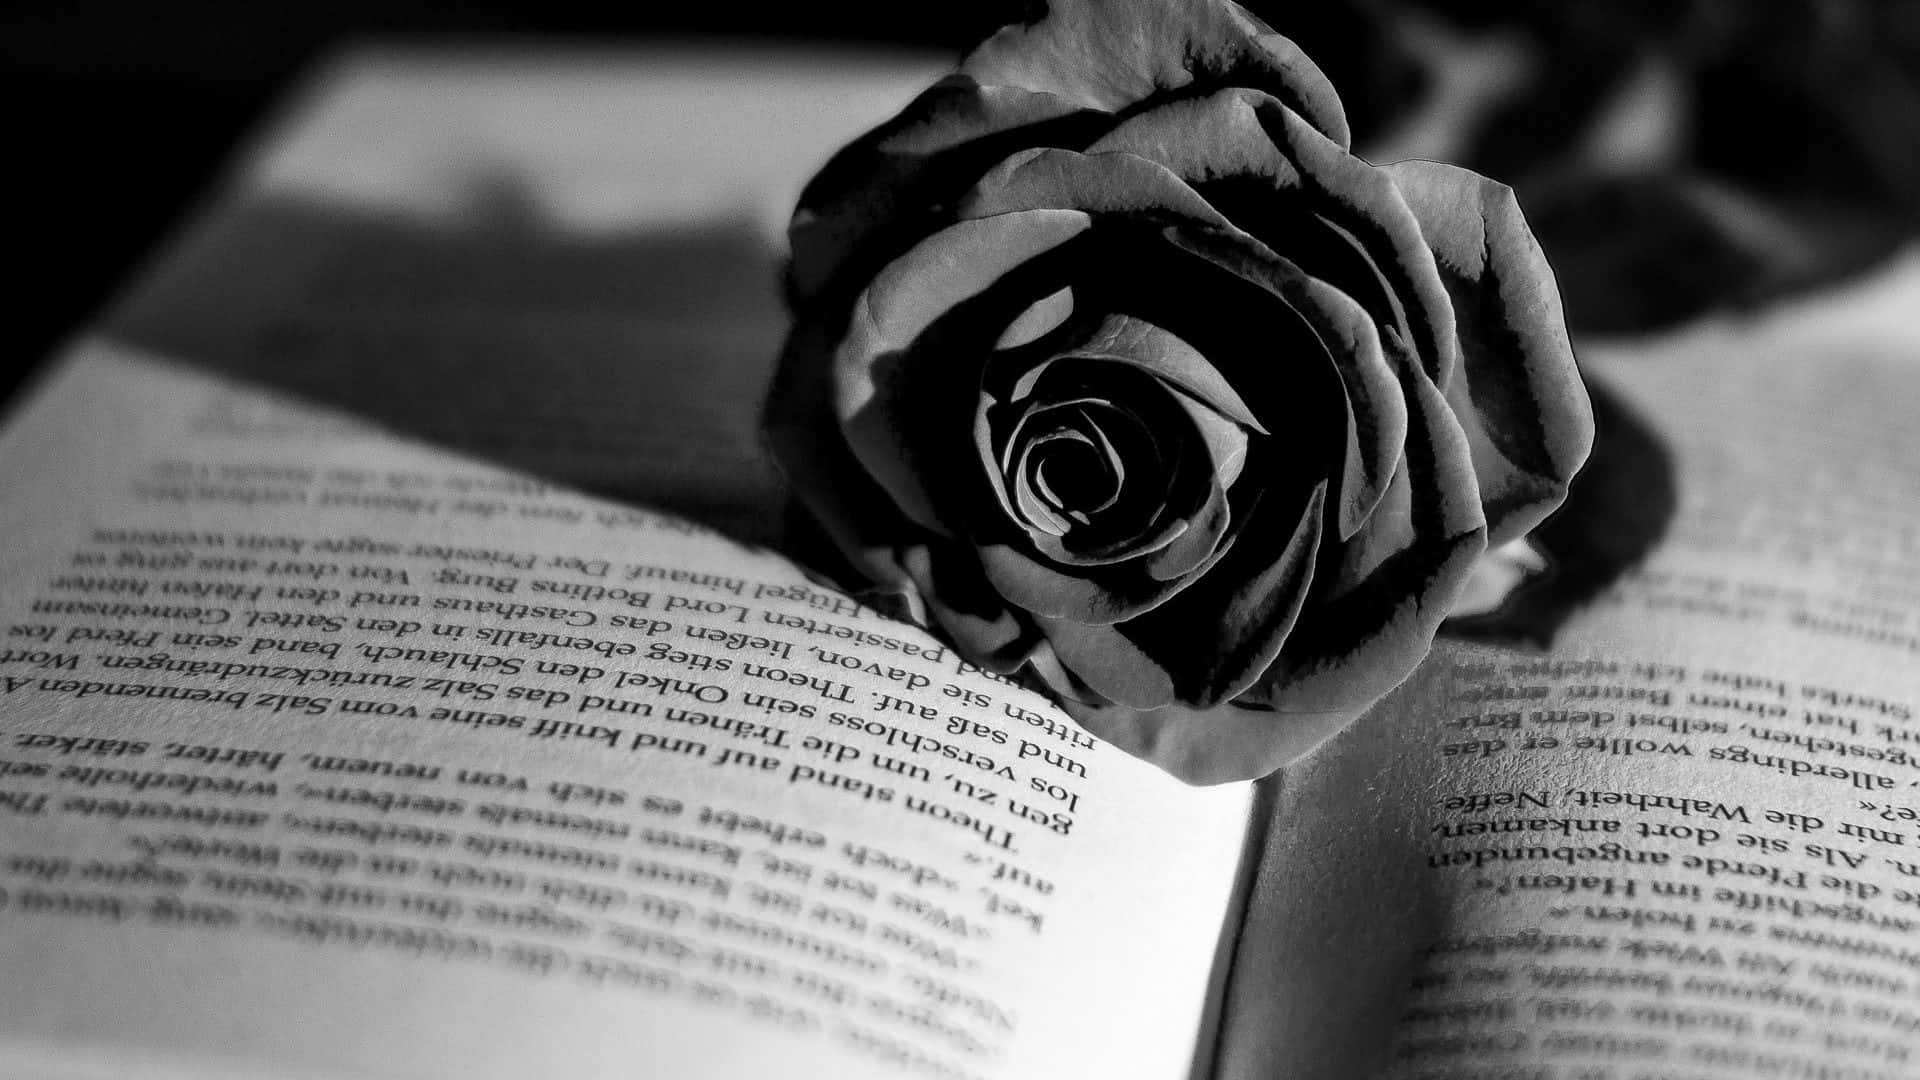 “A Delicate and Elegant Black Rose”